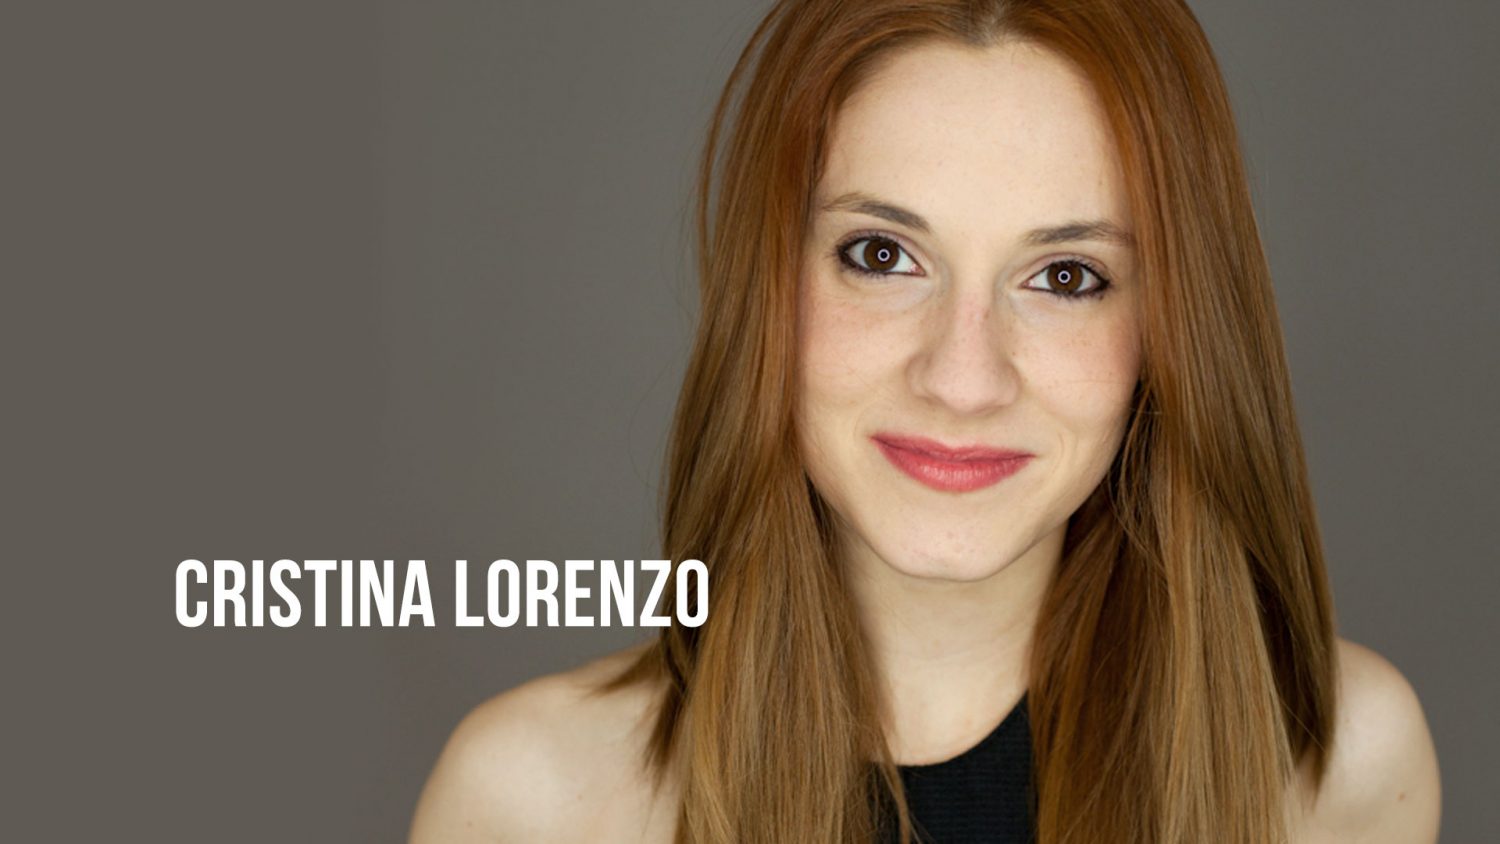 Cristina Lorenzo - Videobook Actriz